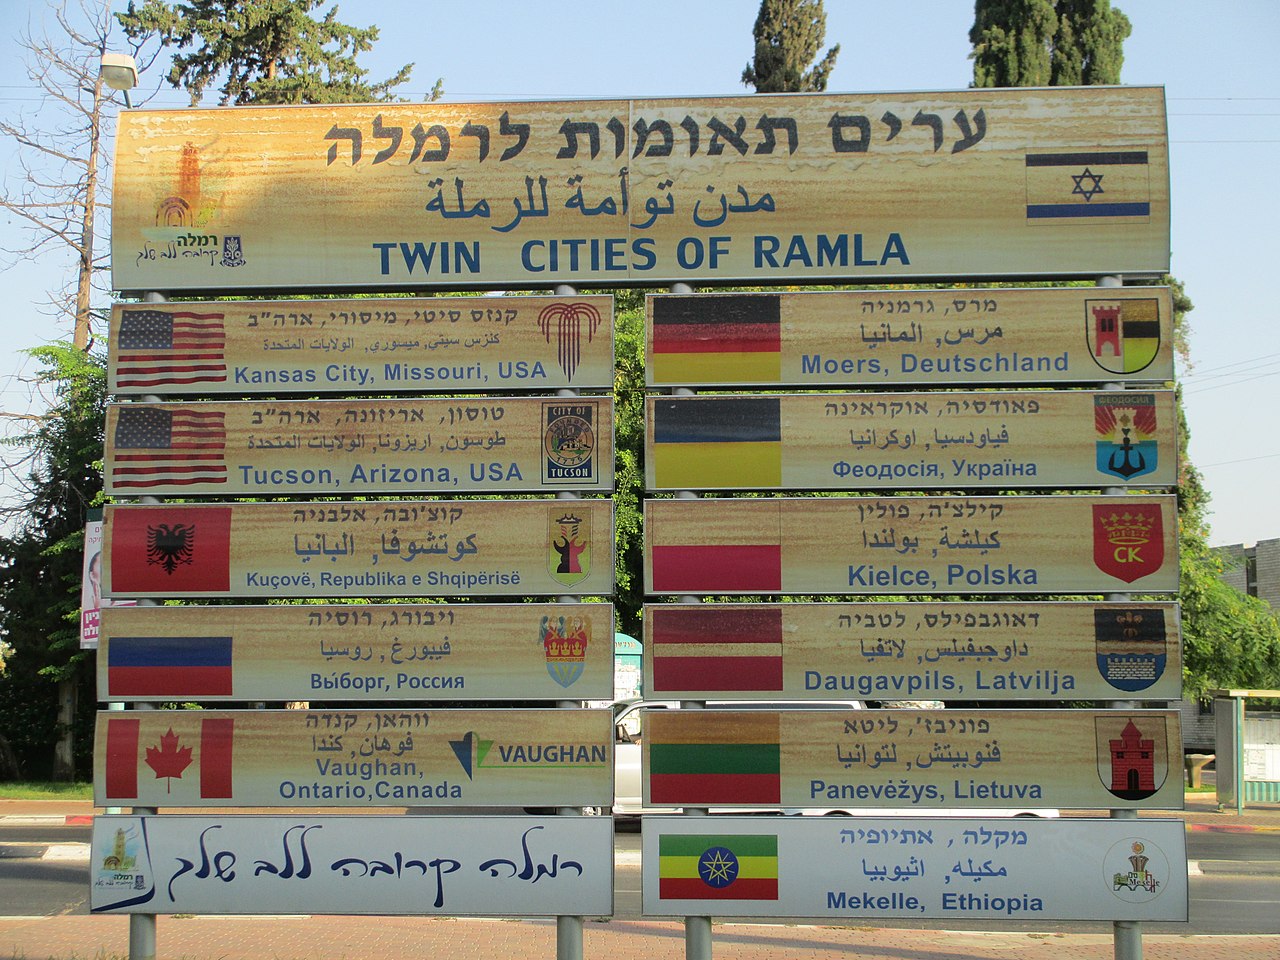 Signs showing the twin cities of Ramla, Israel, August 22, 2016. (Avishai Teicher/CC BY-SA 4.0)